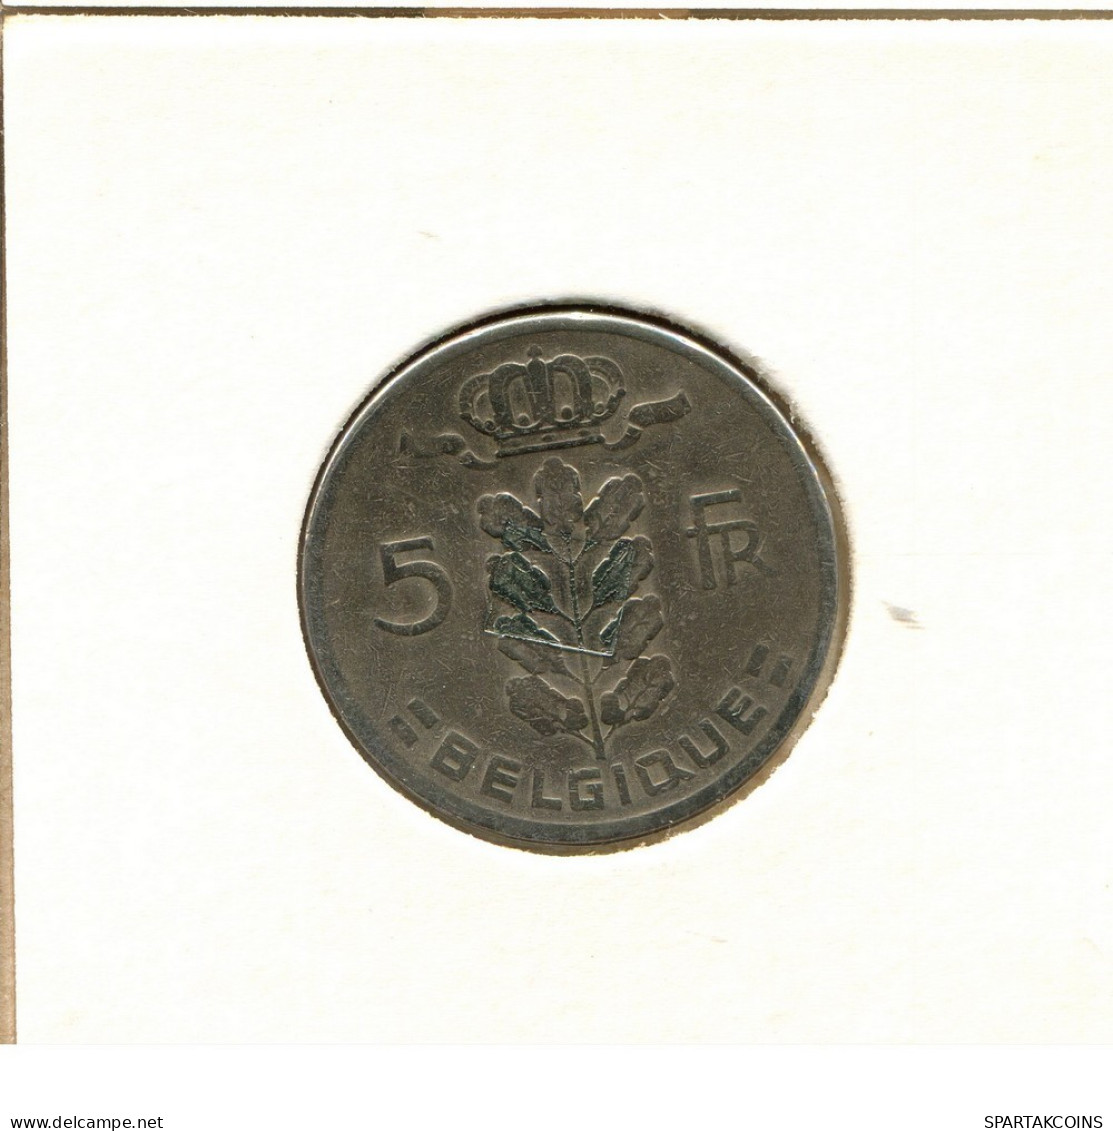 5 FRANCS 1963 Französisch Text BELGIEN BELGIUM Münze #BB332.D.A - 5 Francs